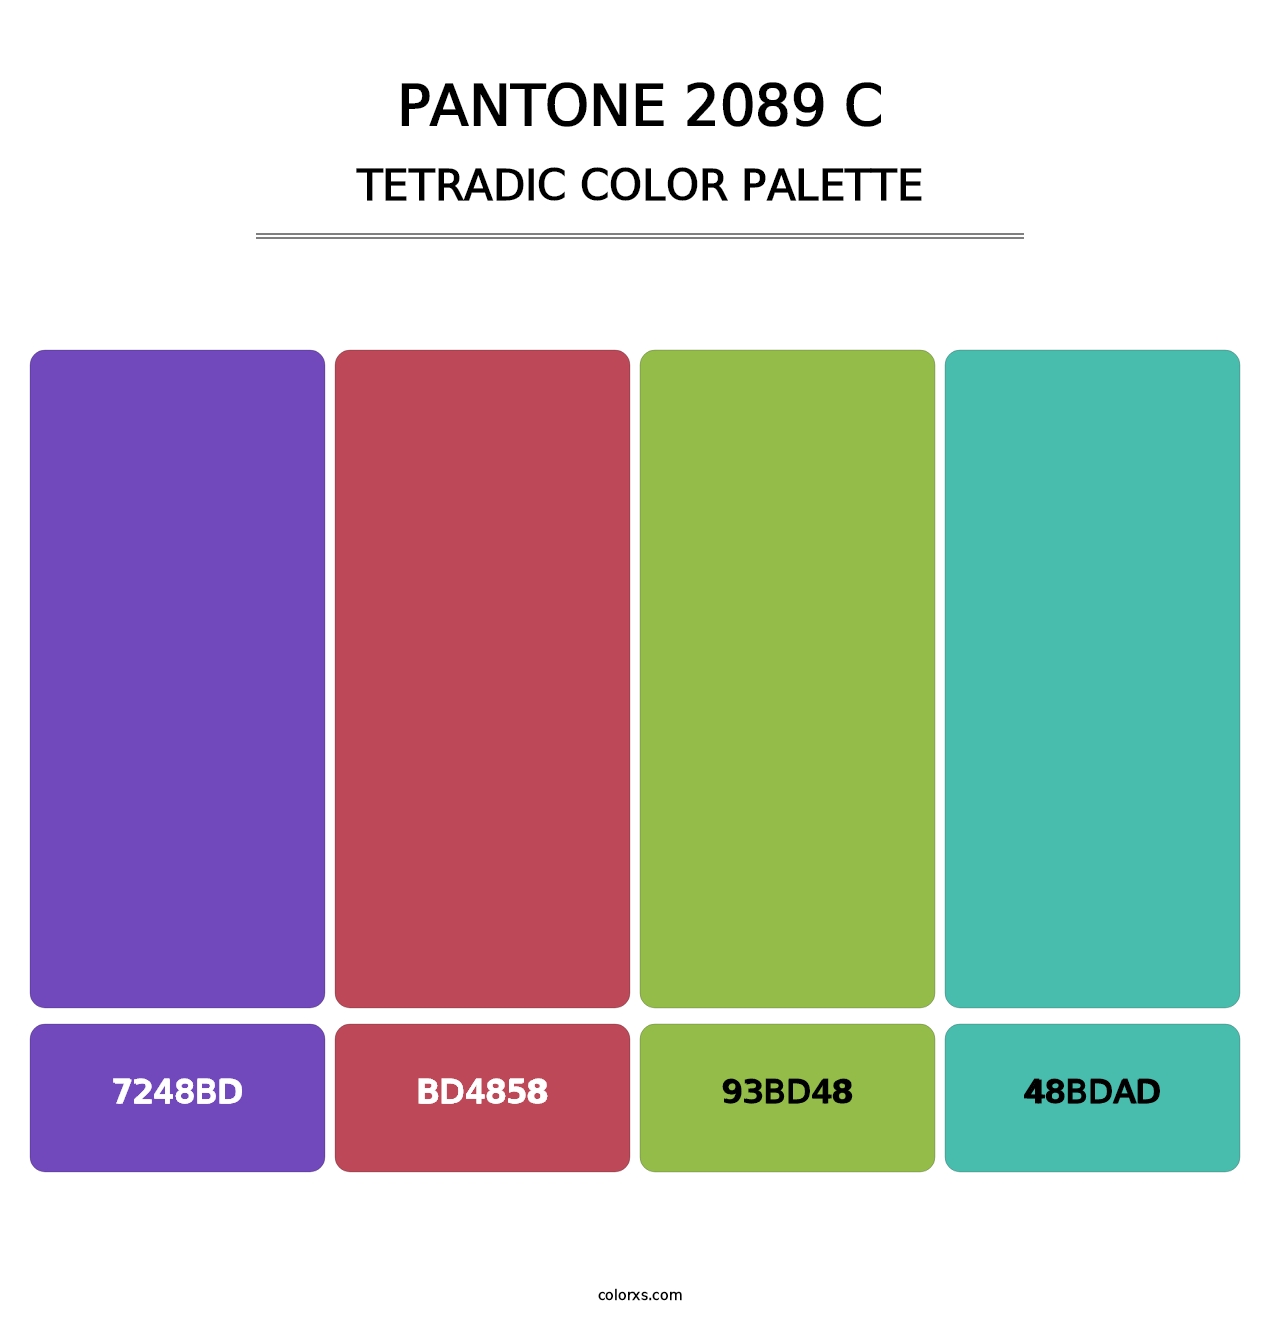 PANTONE 2089 C - Tetradic Color Palette